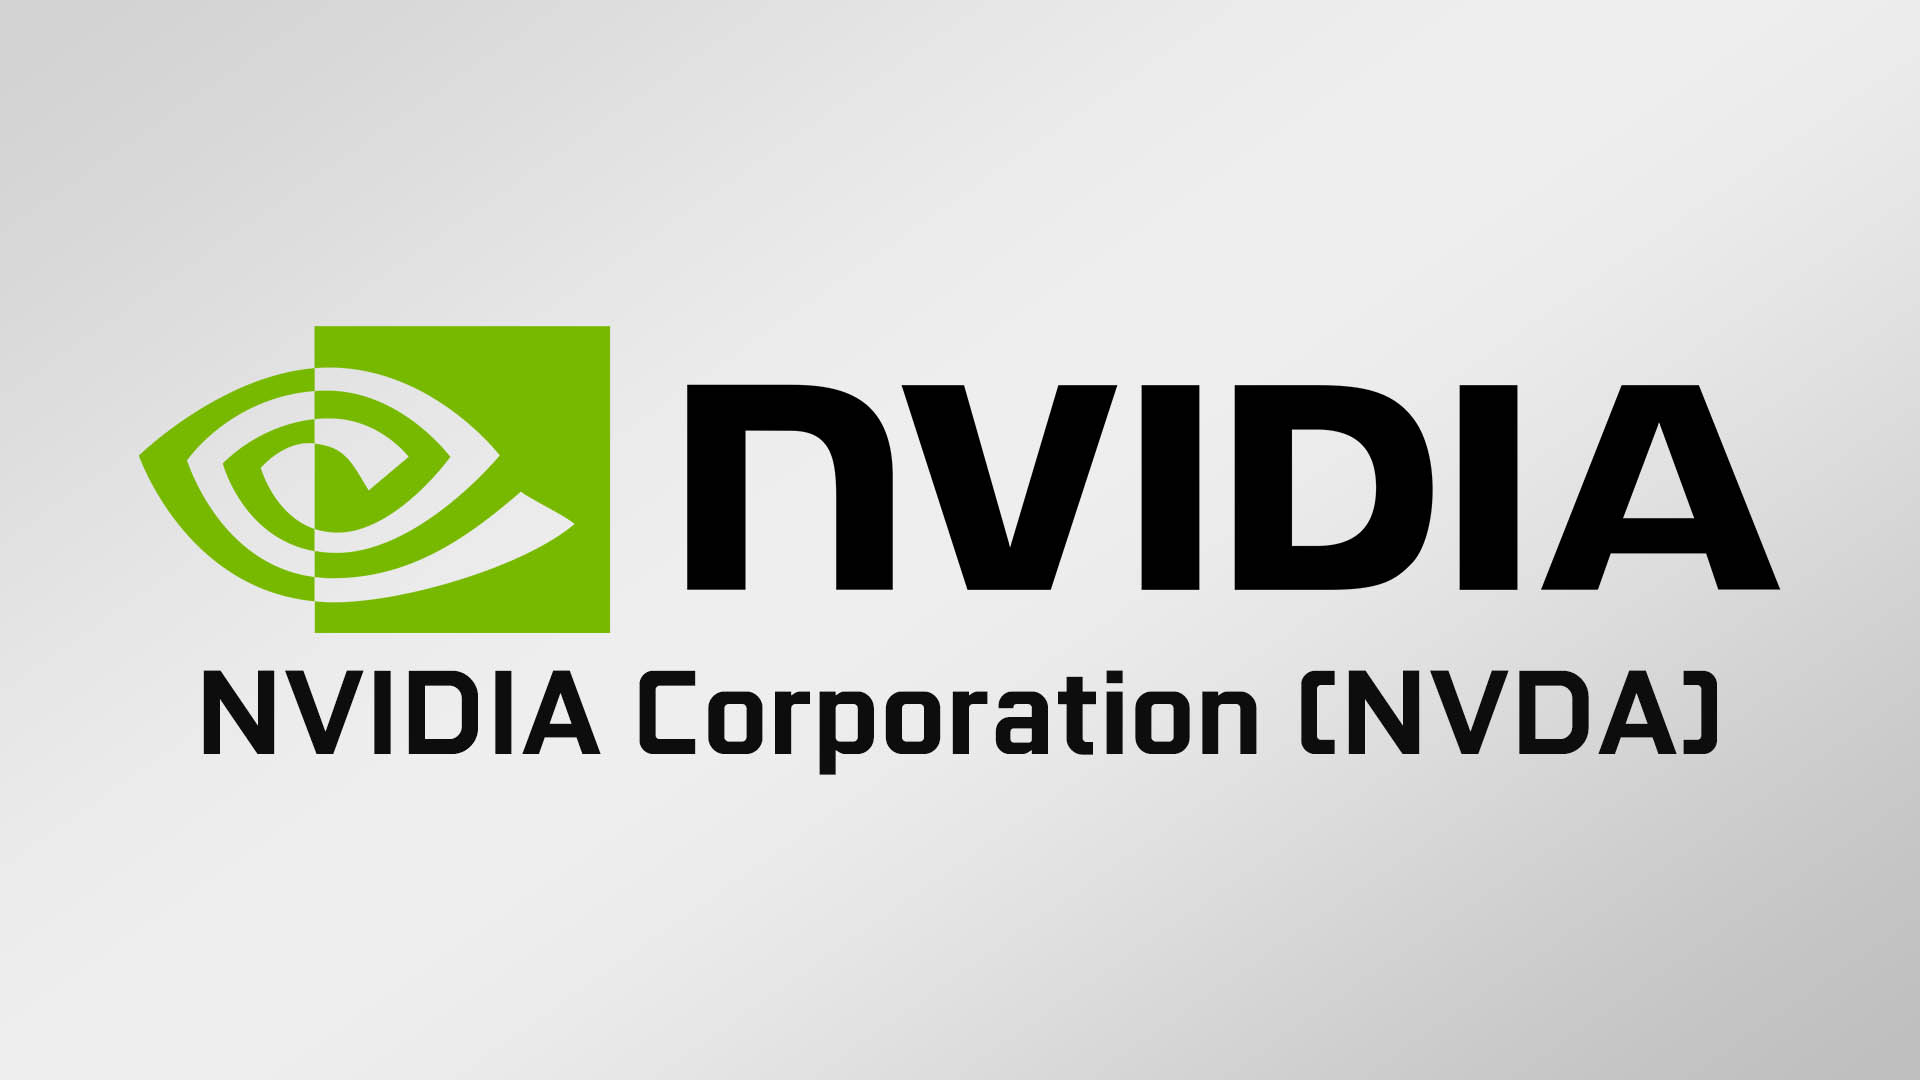 NVIDIAがサイバー攻撃に対して報復攻撃をする。では無くただの遠隔ロックだった模様。